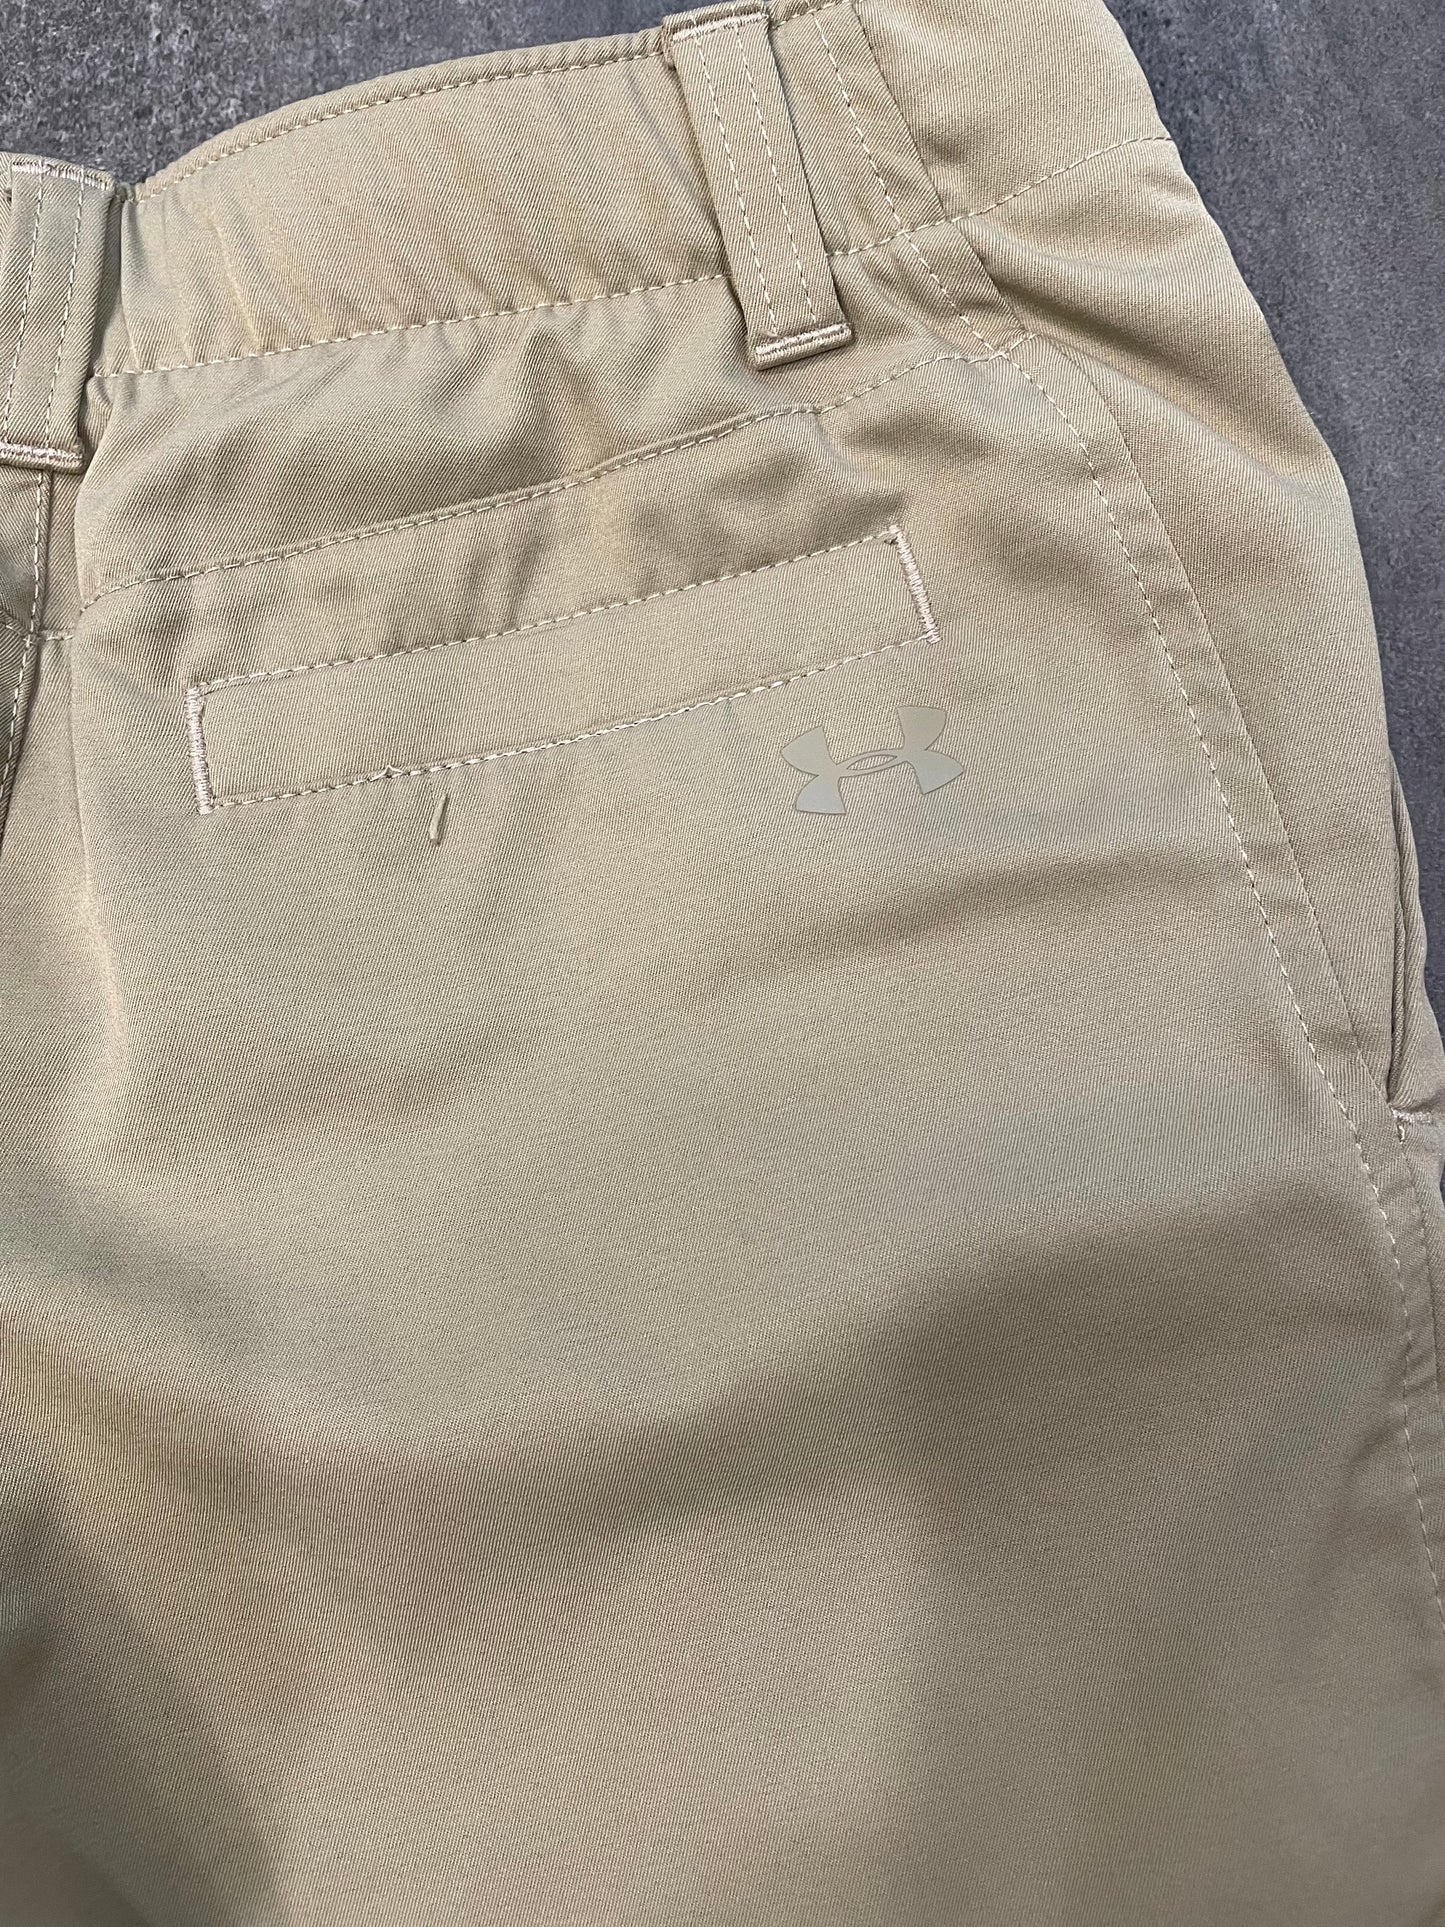 Under Armour Tan Flat Front Boys Shorts (8)